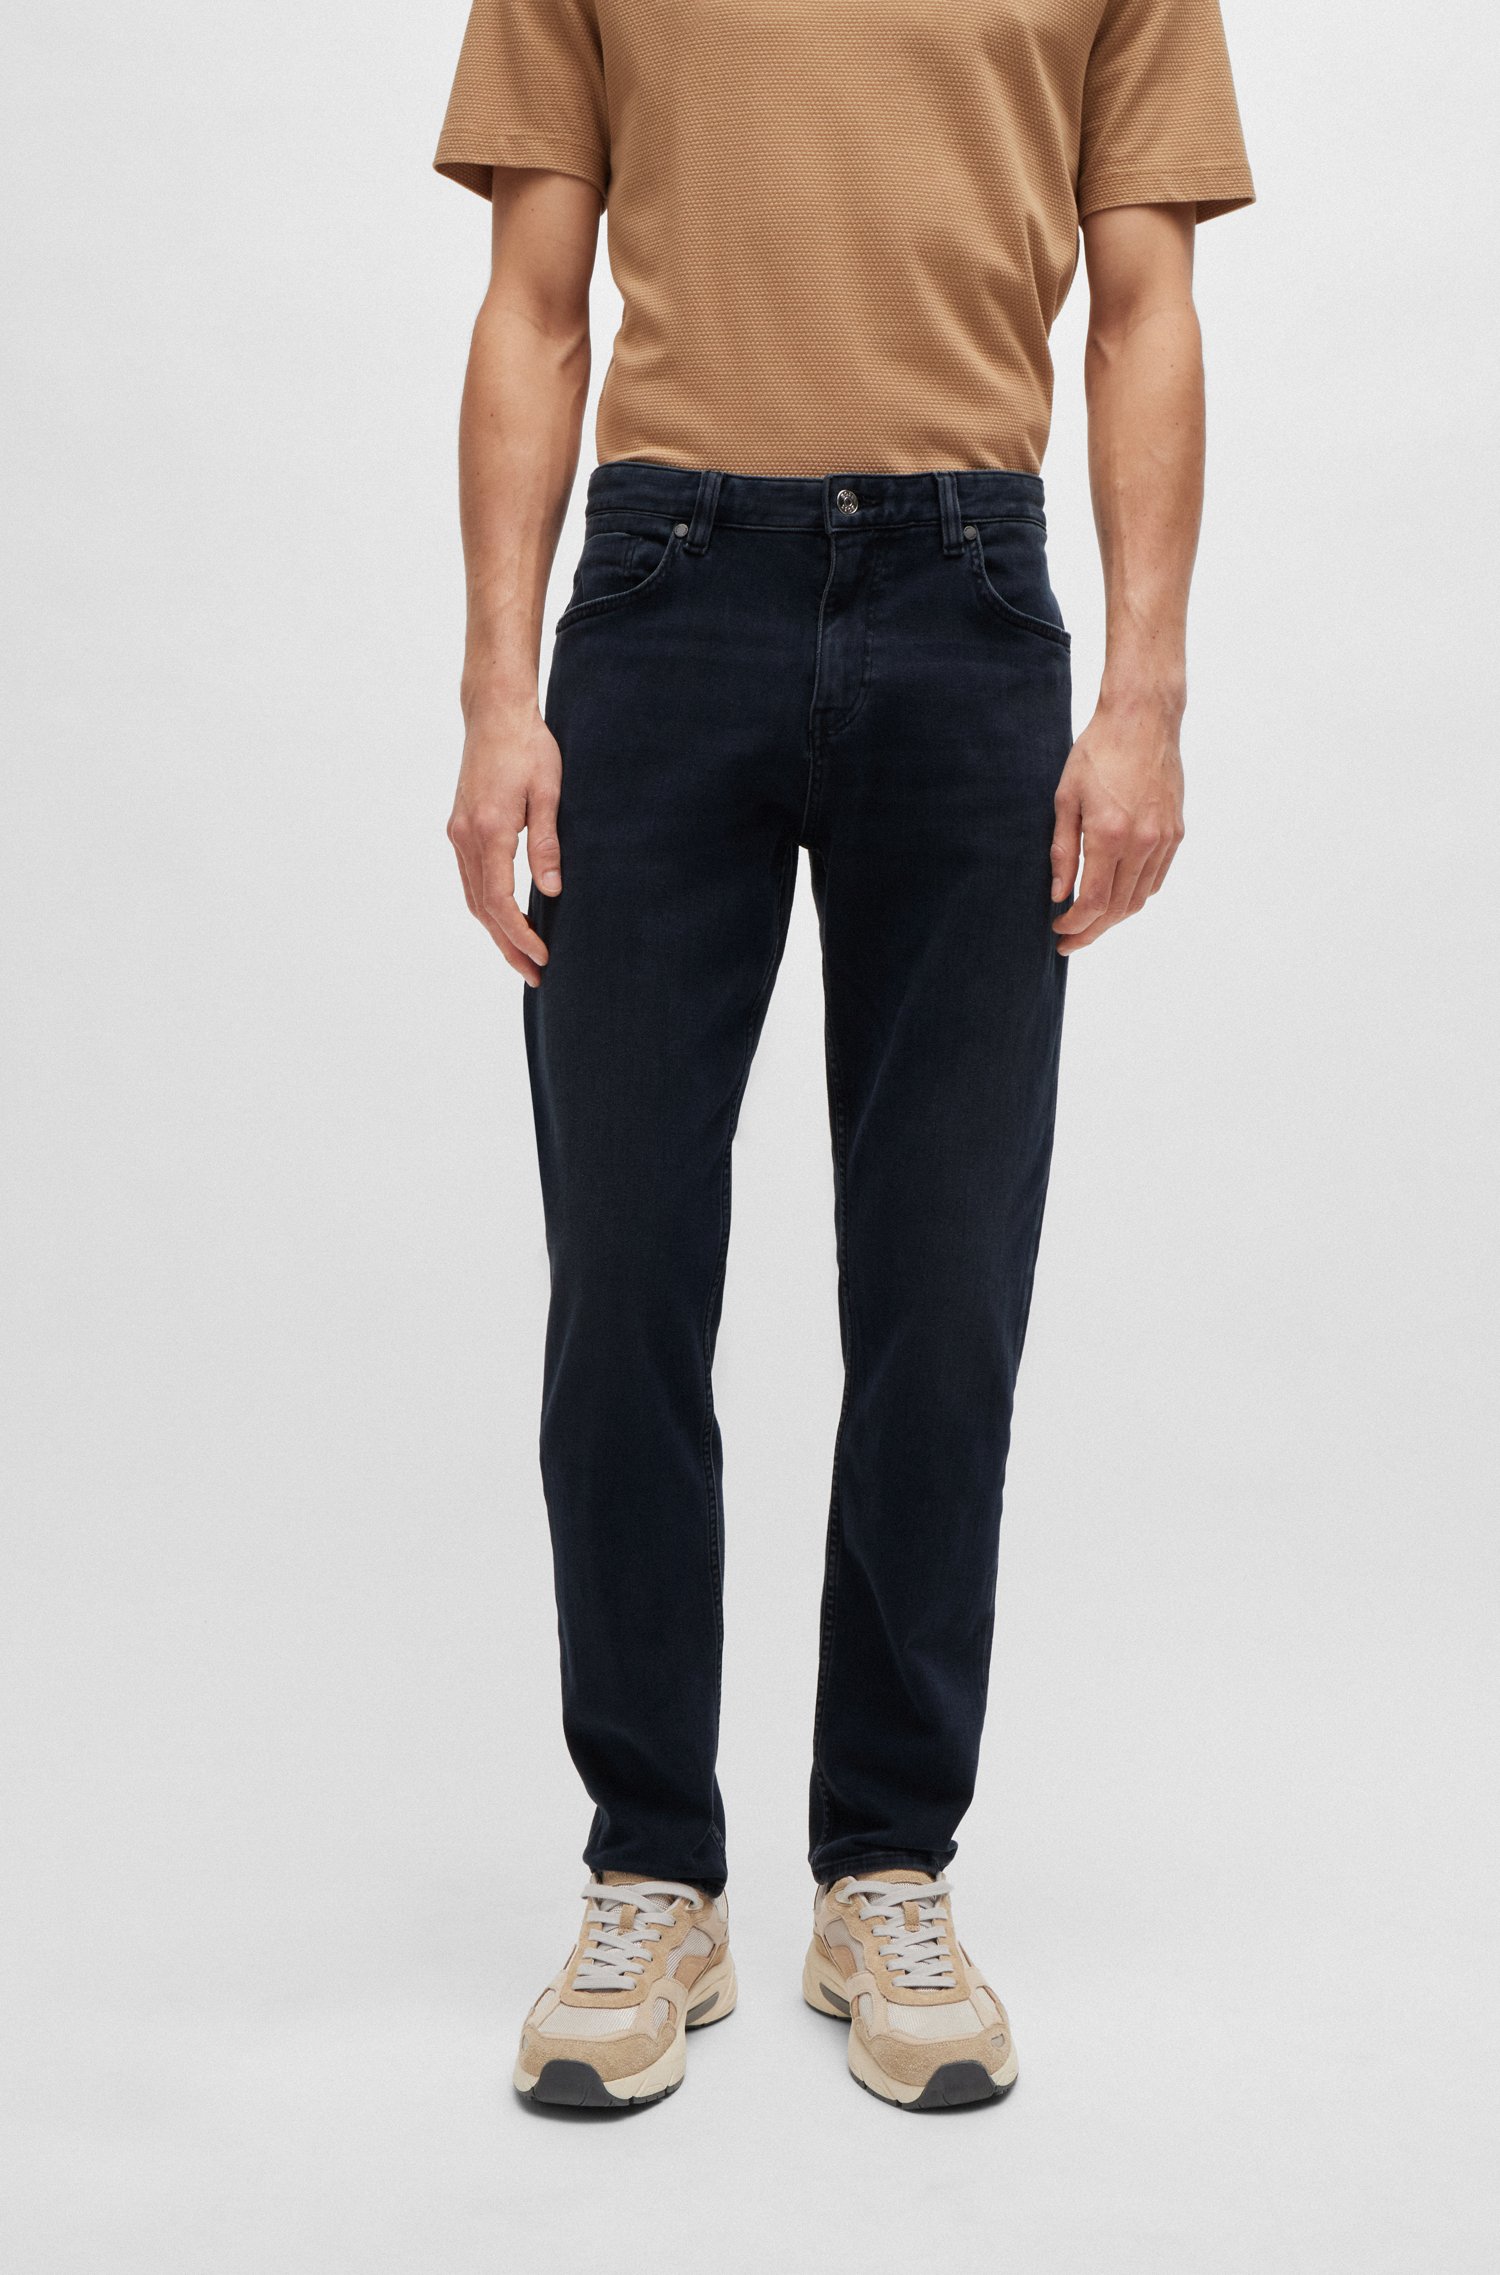 Maine Regular-fit jeans coal-navy Italian denim